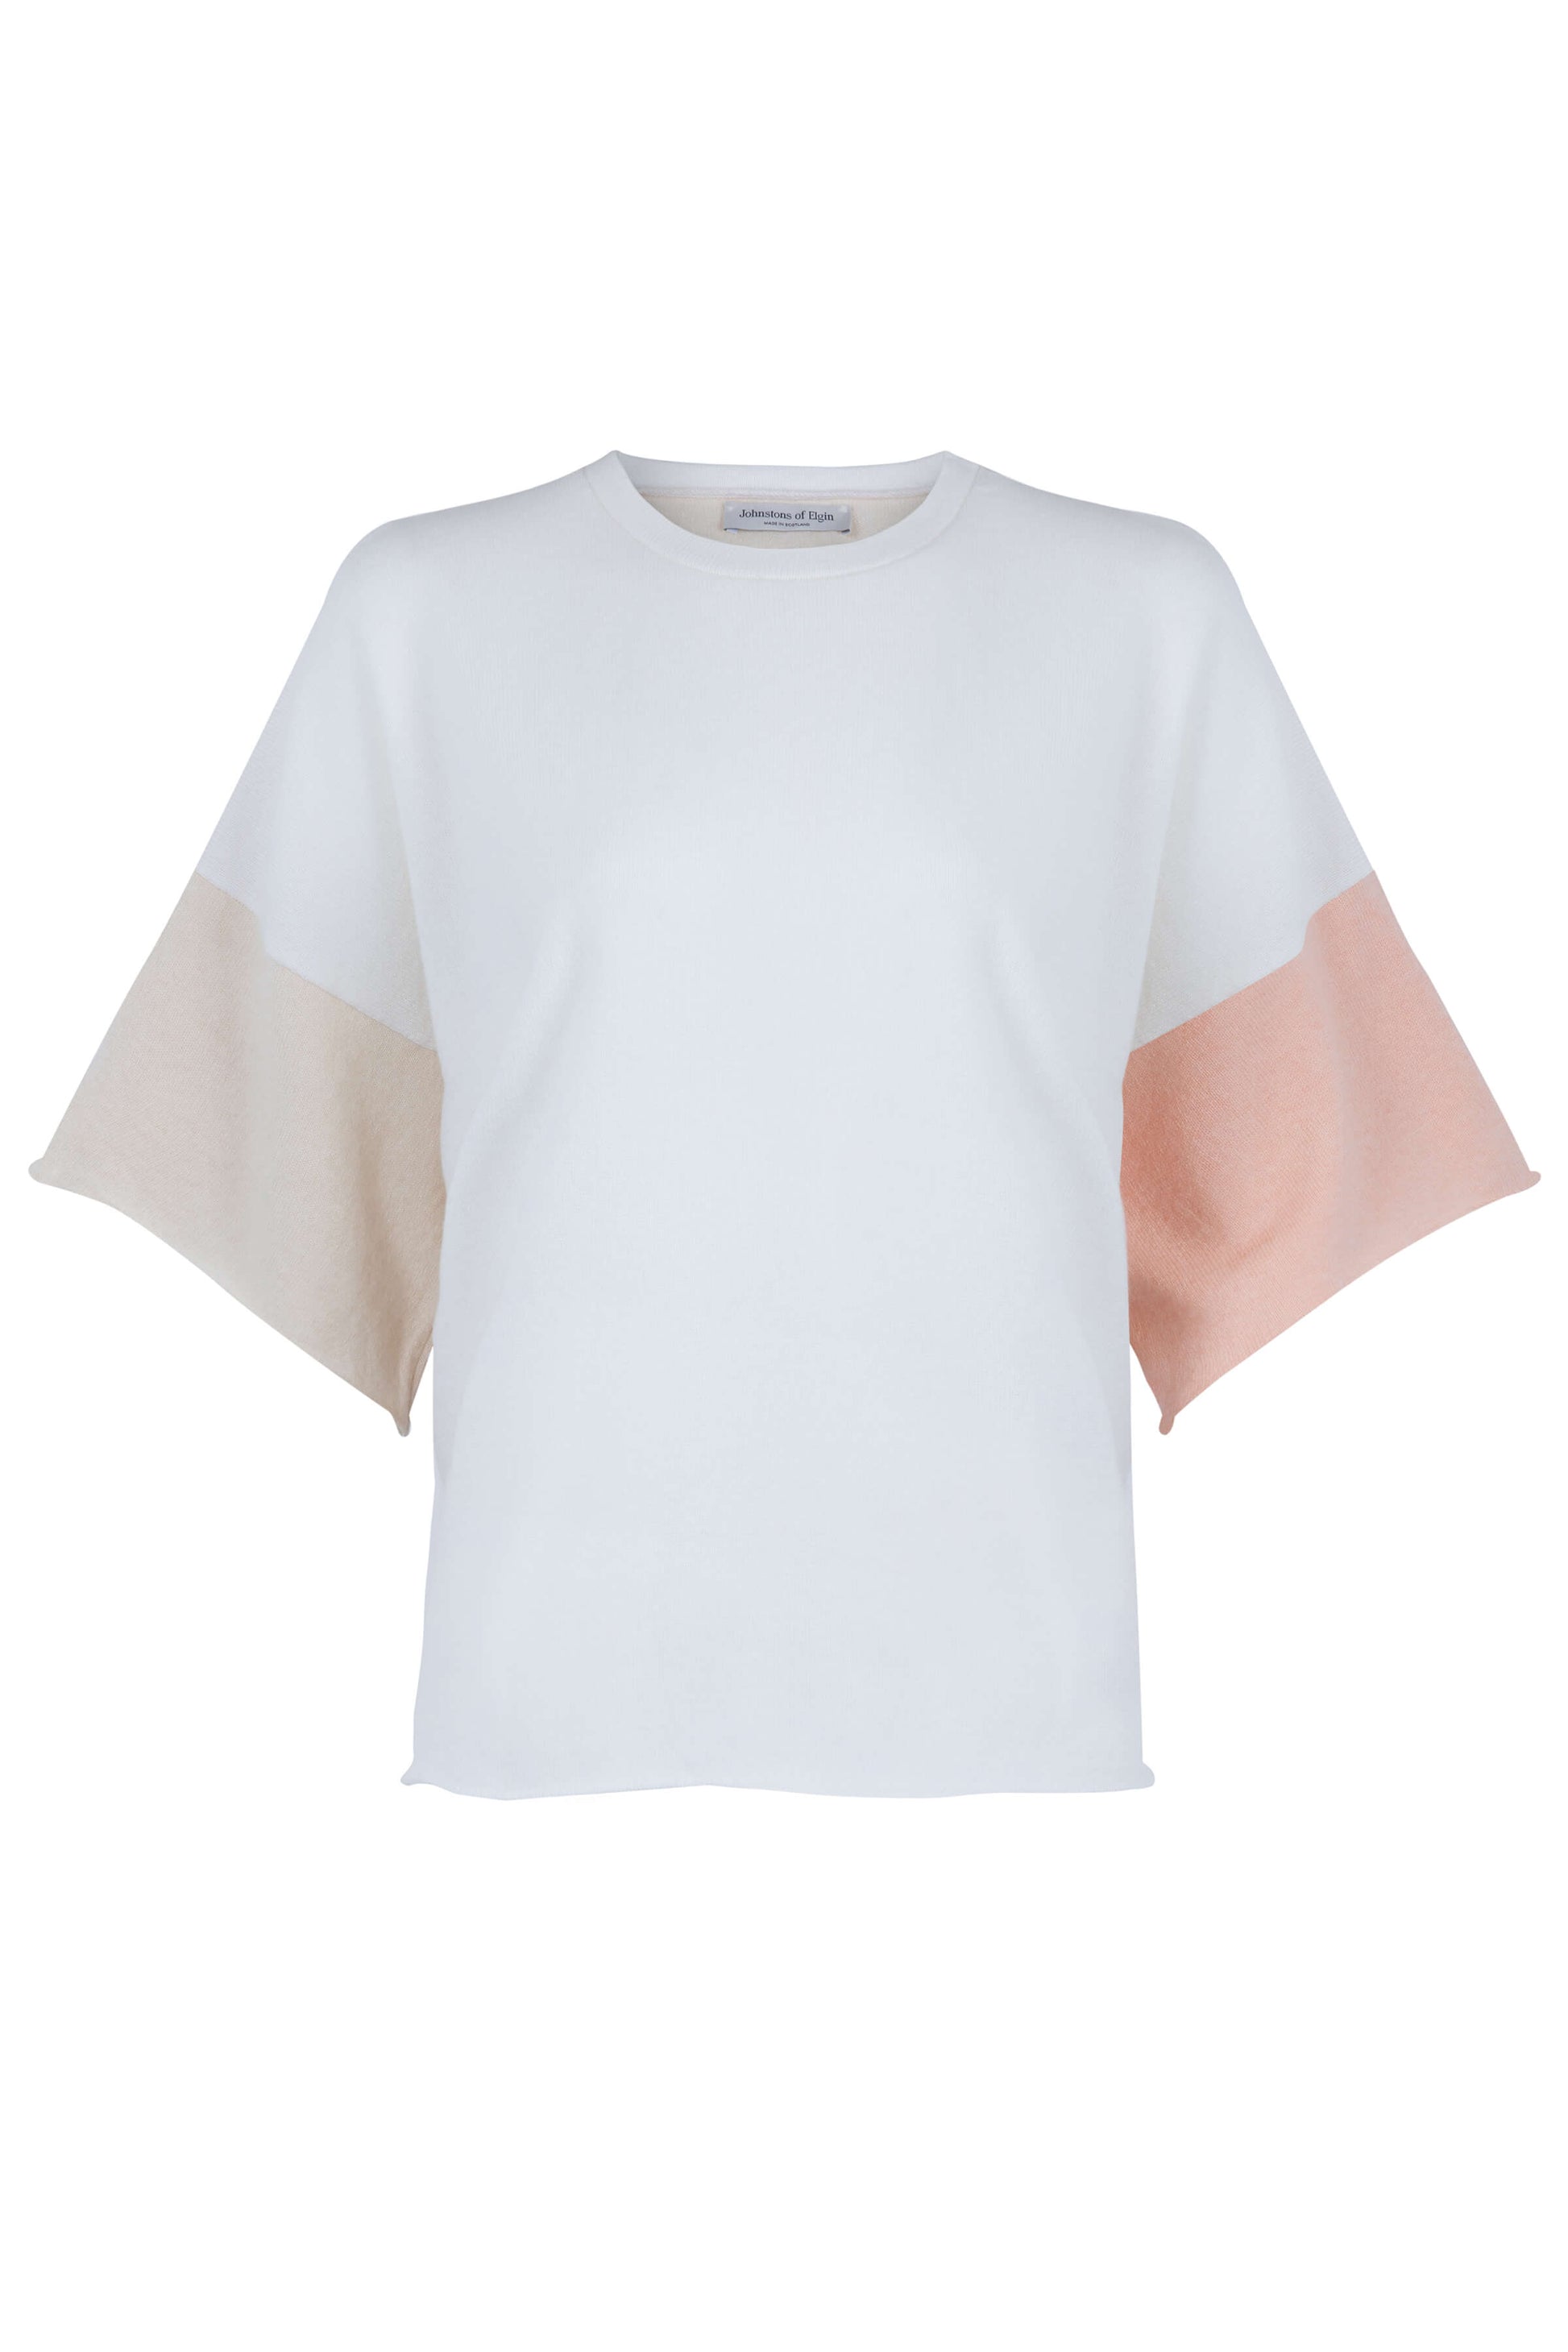 Johnstons of Elgin SS24 Women's Knitwear Luna White, Oyster & Champagne Colour Block Cashmere T-Shirt KAP05200Q24277